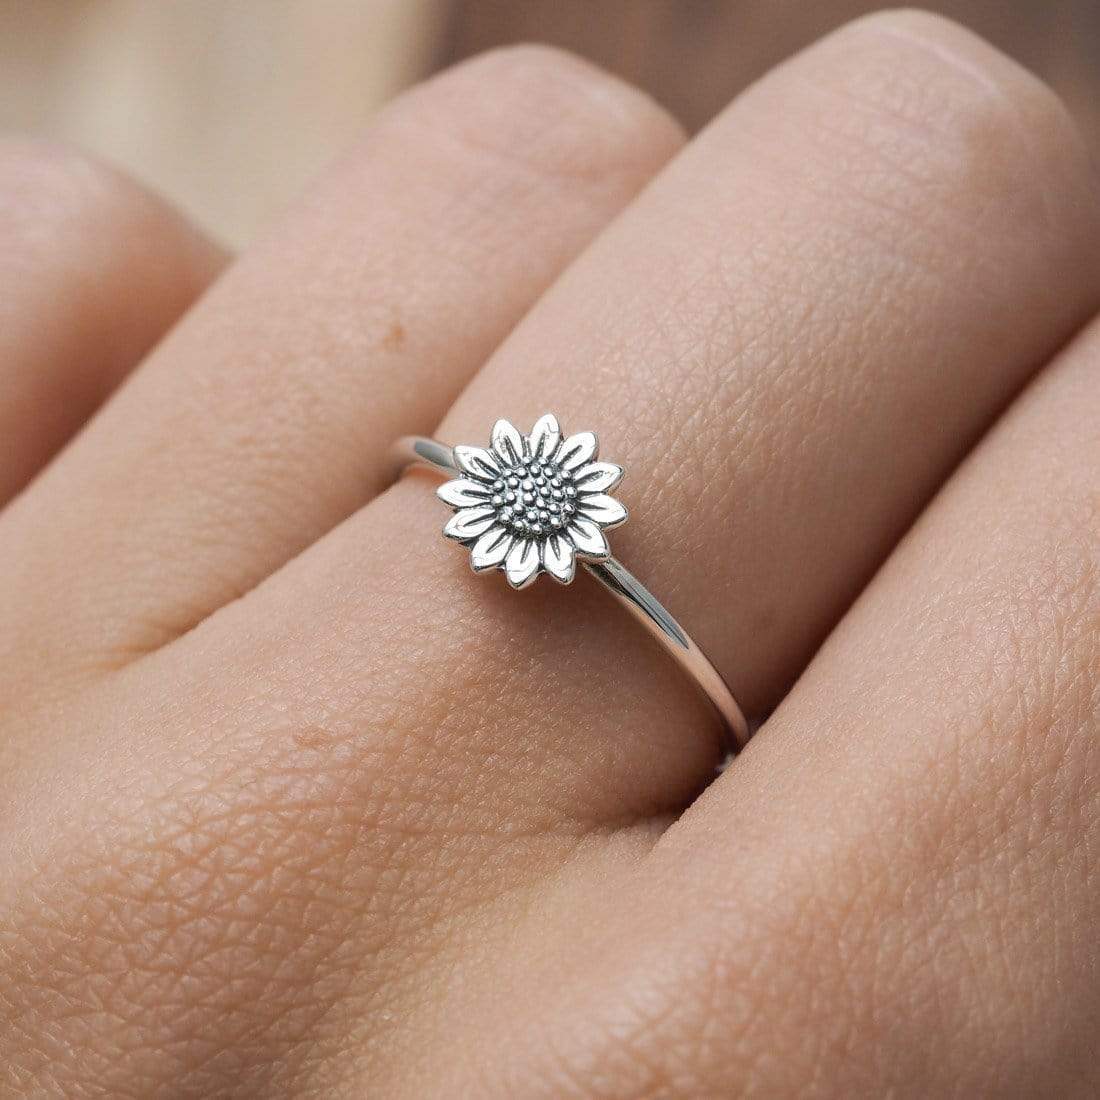 Delicate Sunflower Ring